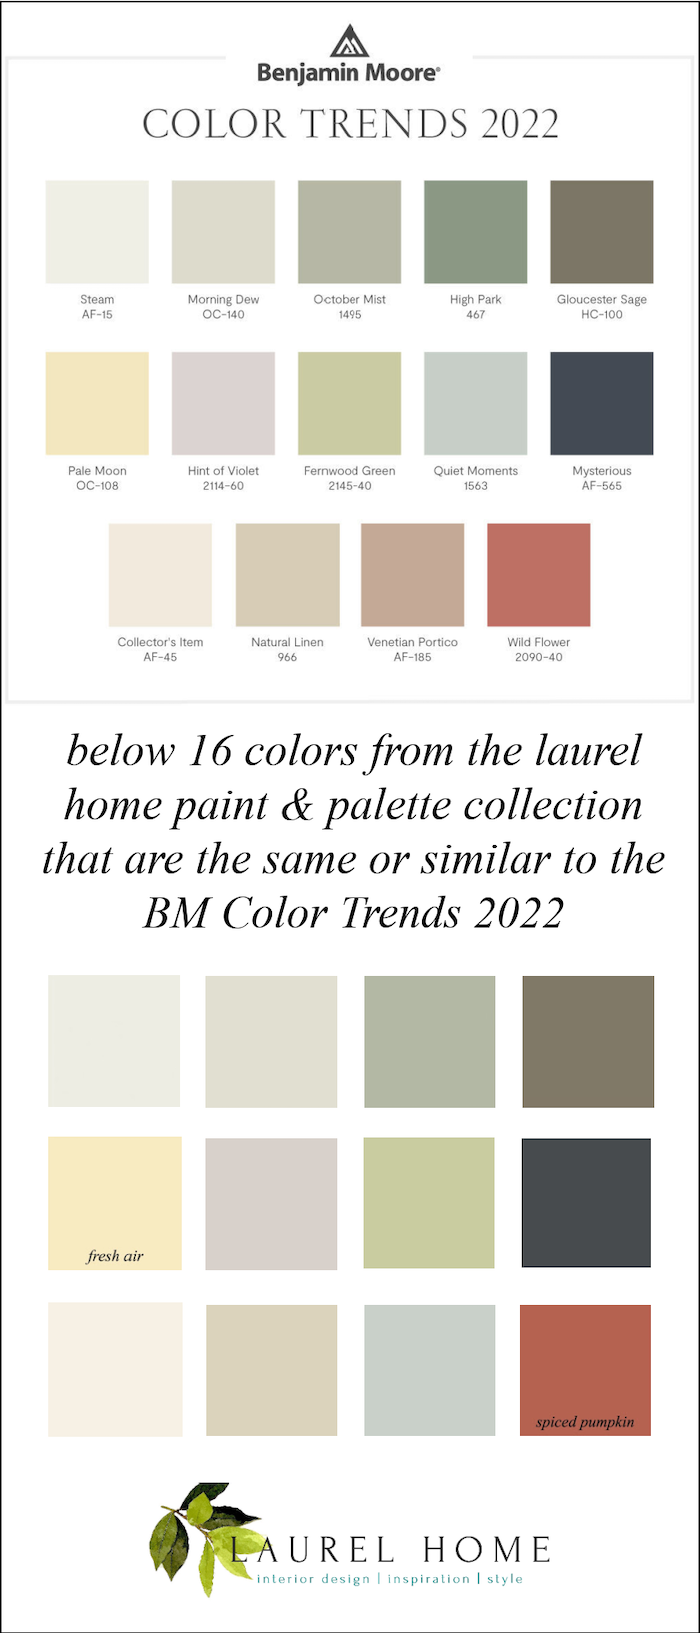 color trends 2022 - Benjamin Moore COTY 2022